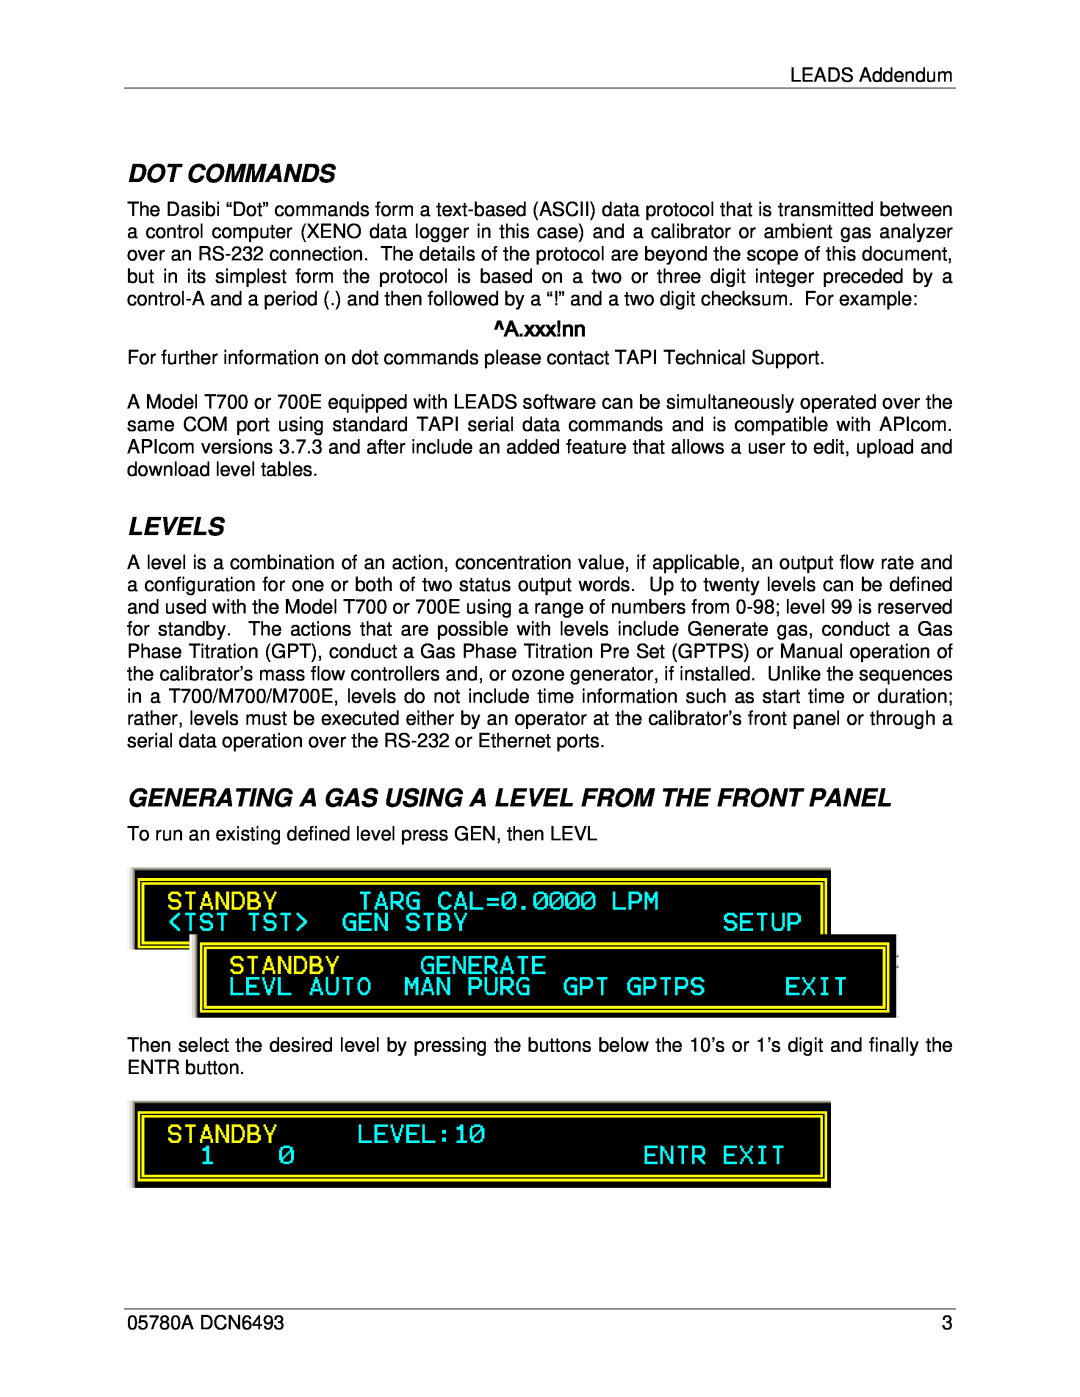 Teledyne t7000, t700e user manual Dot Commands, Levels, A.xxx!nn 